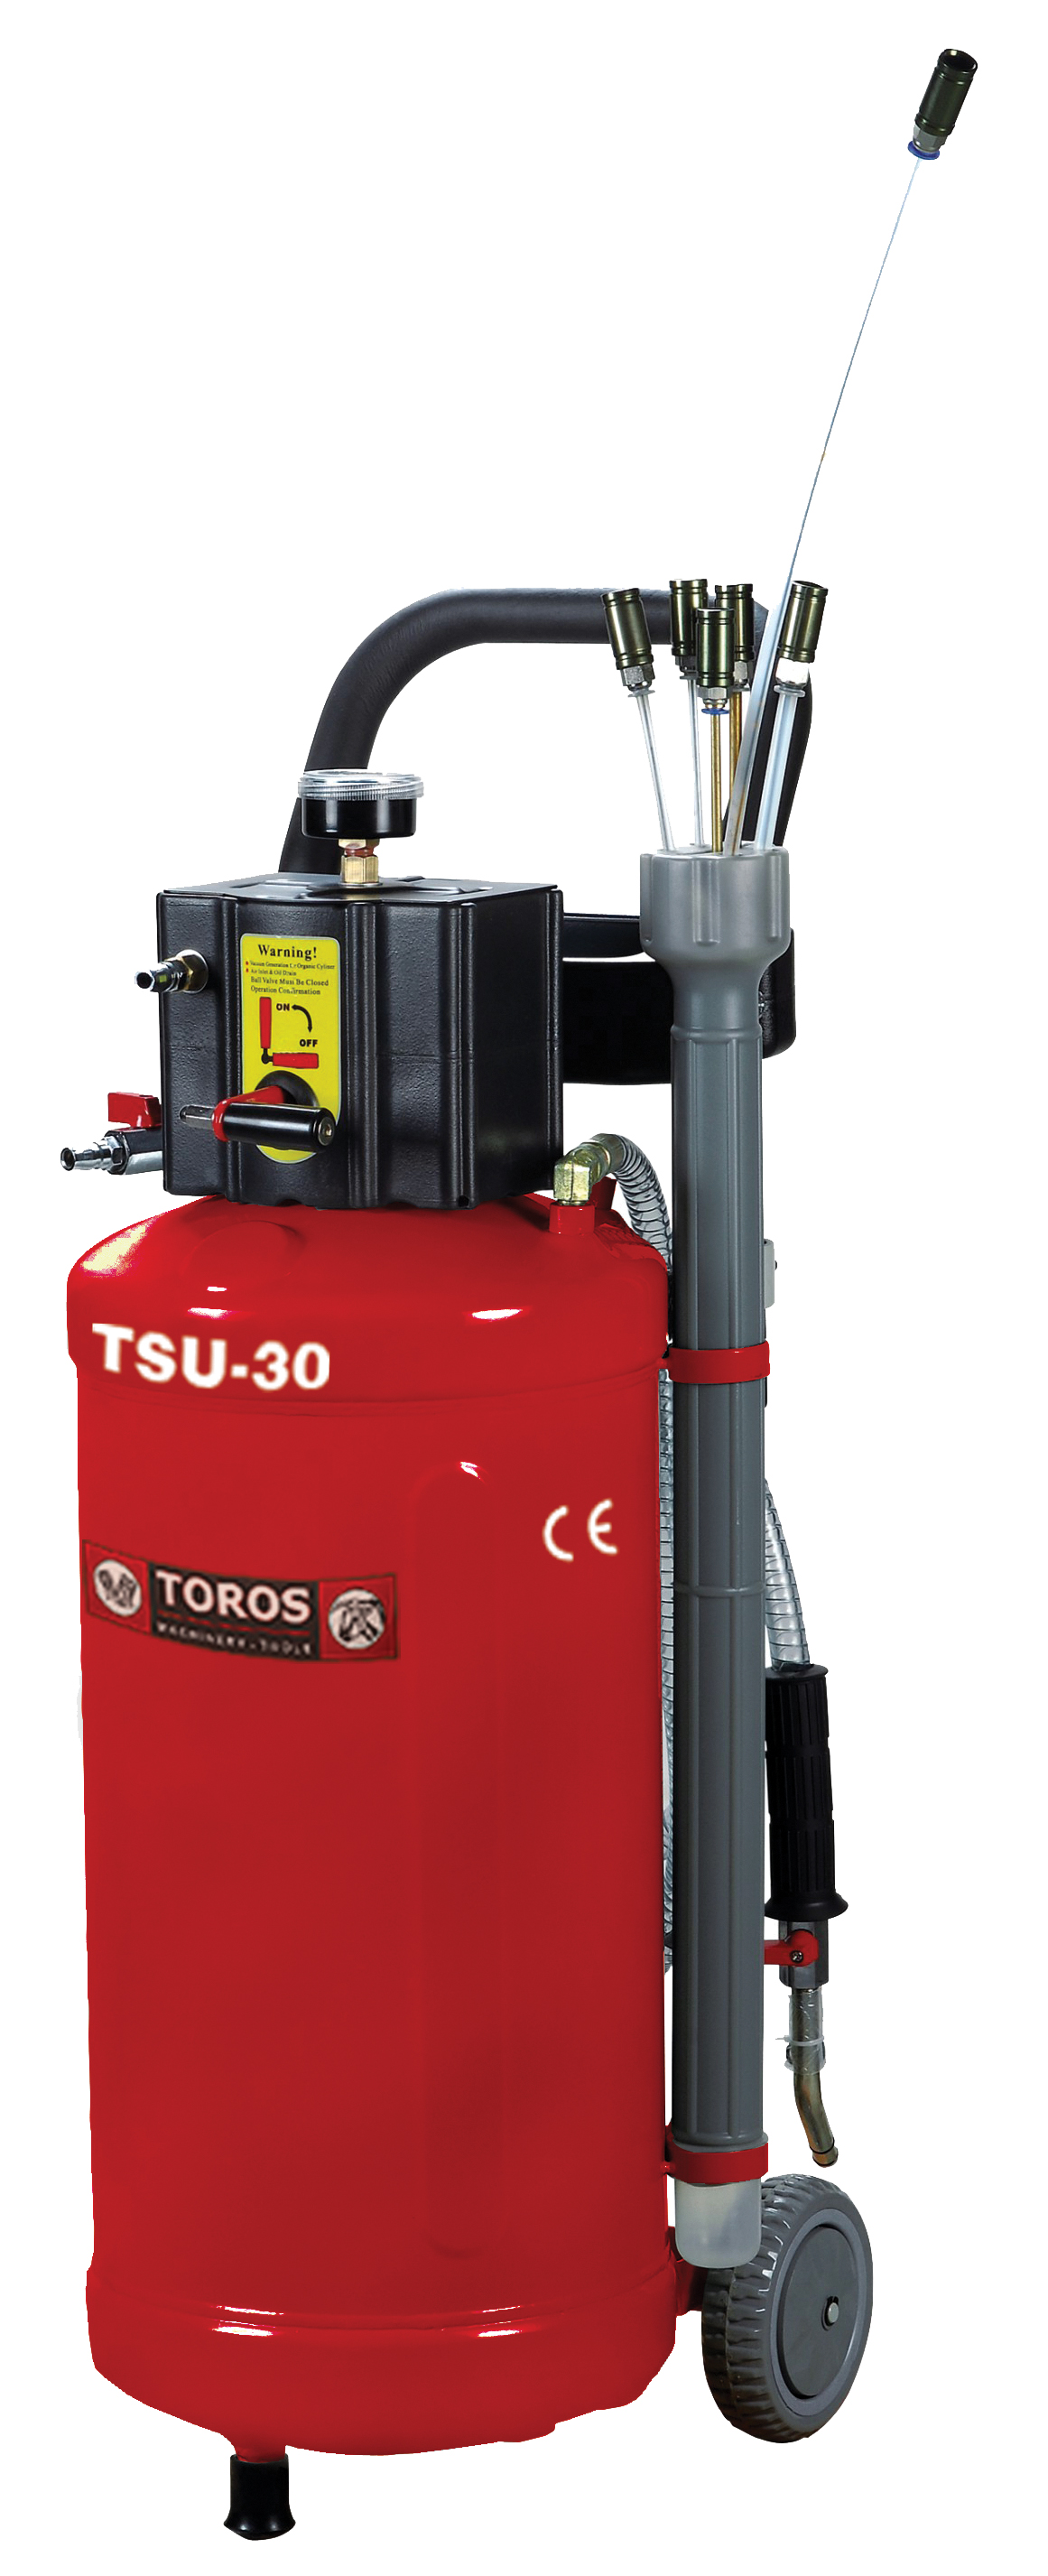 TSU-30 Oil Extractor Pump 30Lt Toros